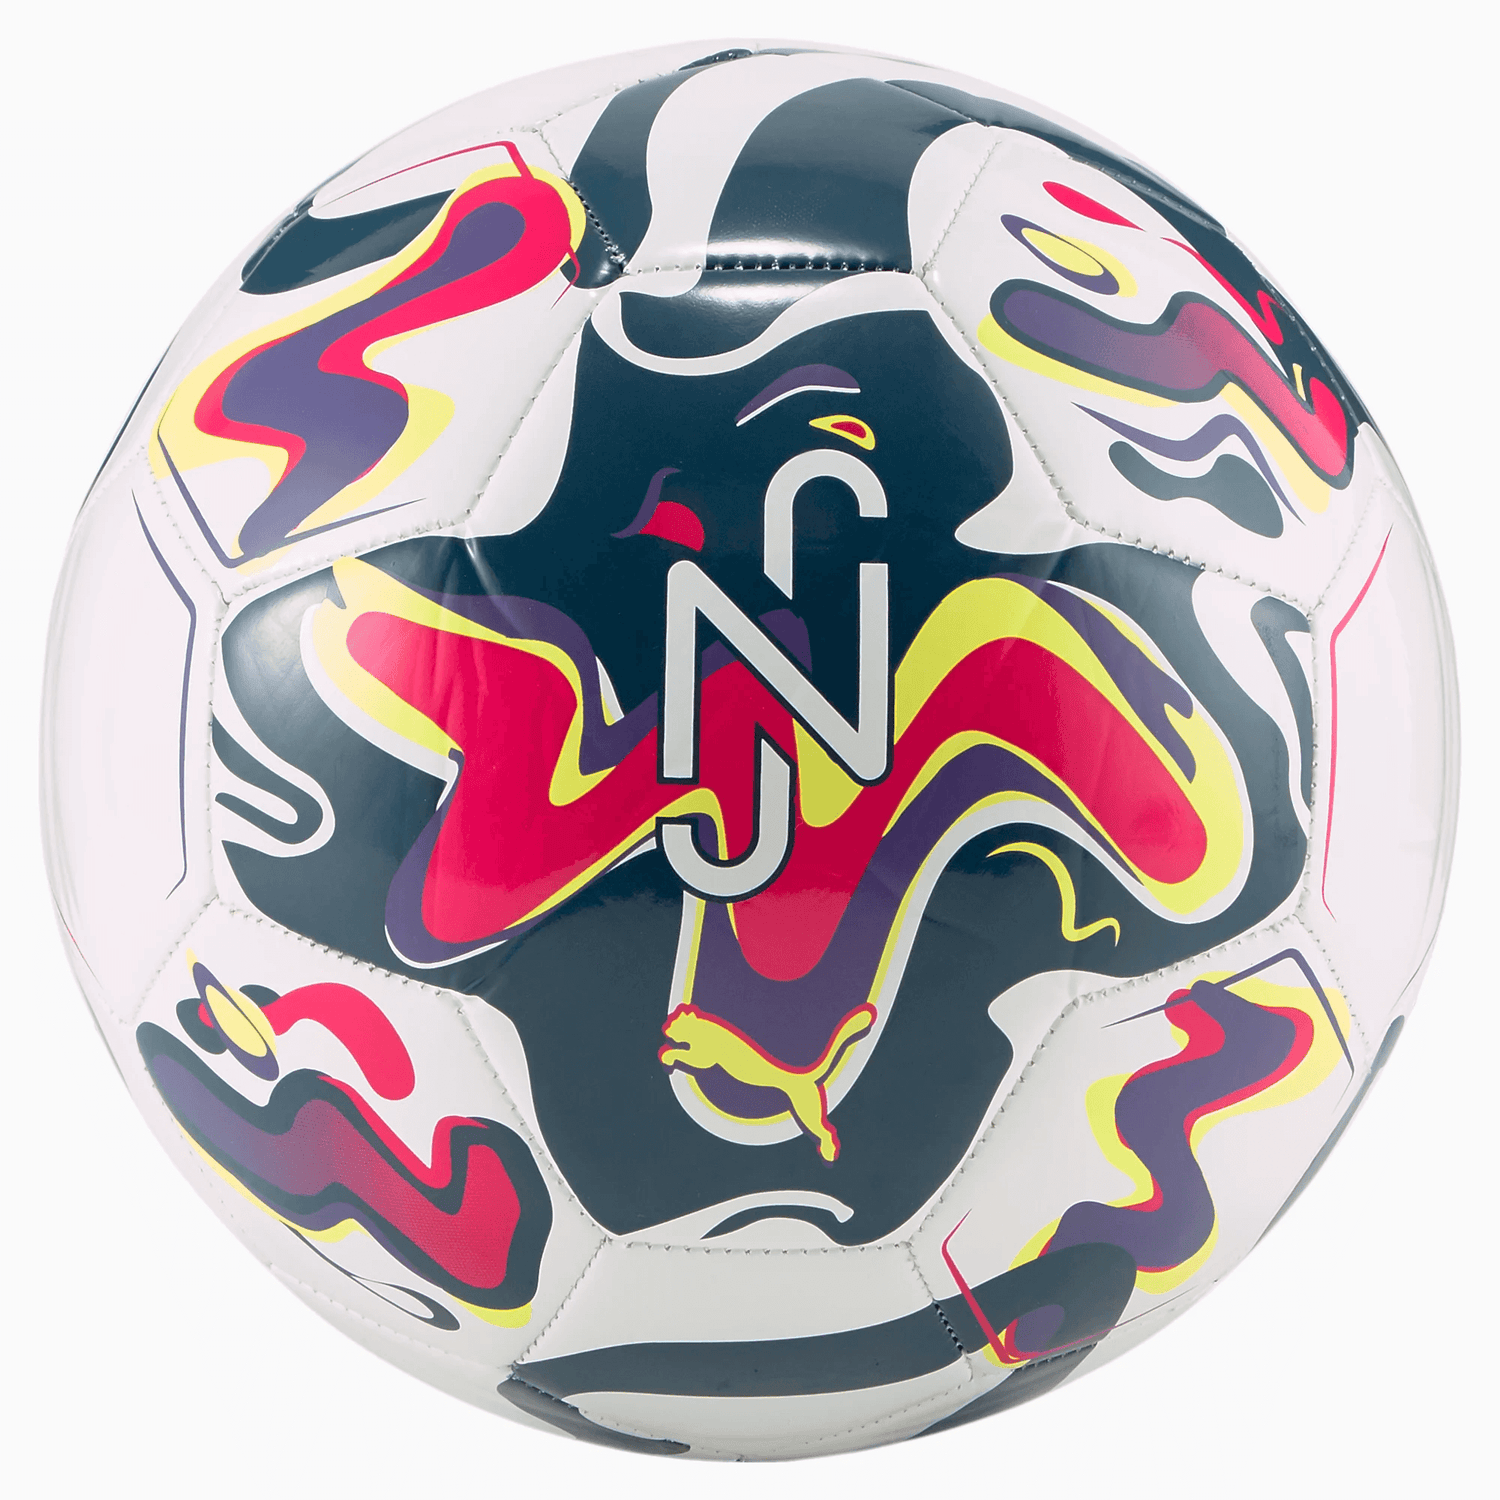 Puma Neymar Jr Graphic Soccer Ball - Dark Night-Orchid Shadow-Fluro Yellow (Front)